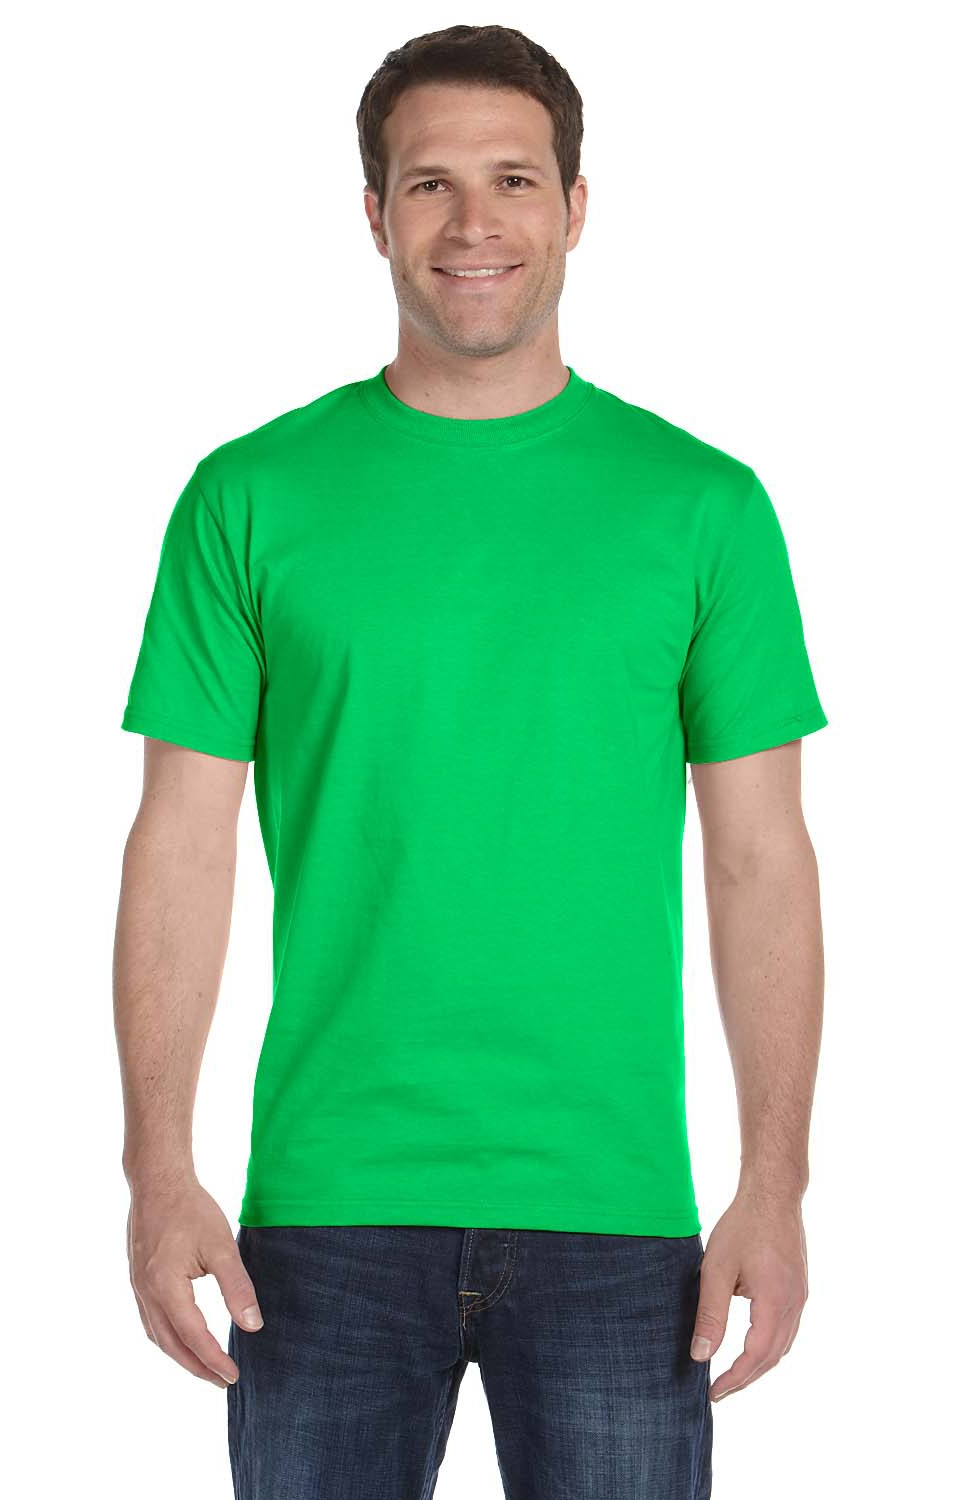 50/50 T-Shirt 3XL - Electric Green Style # G800 - Original Label By Gildan Gildan Adult DryBlend 56 Oz